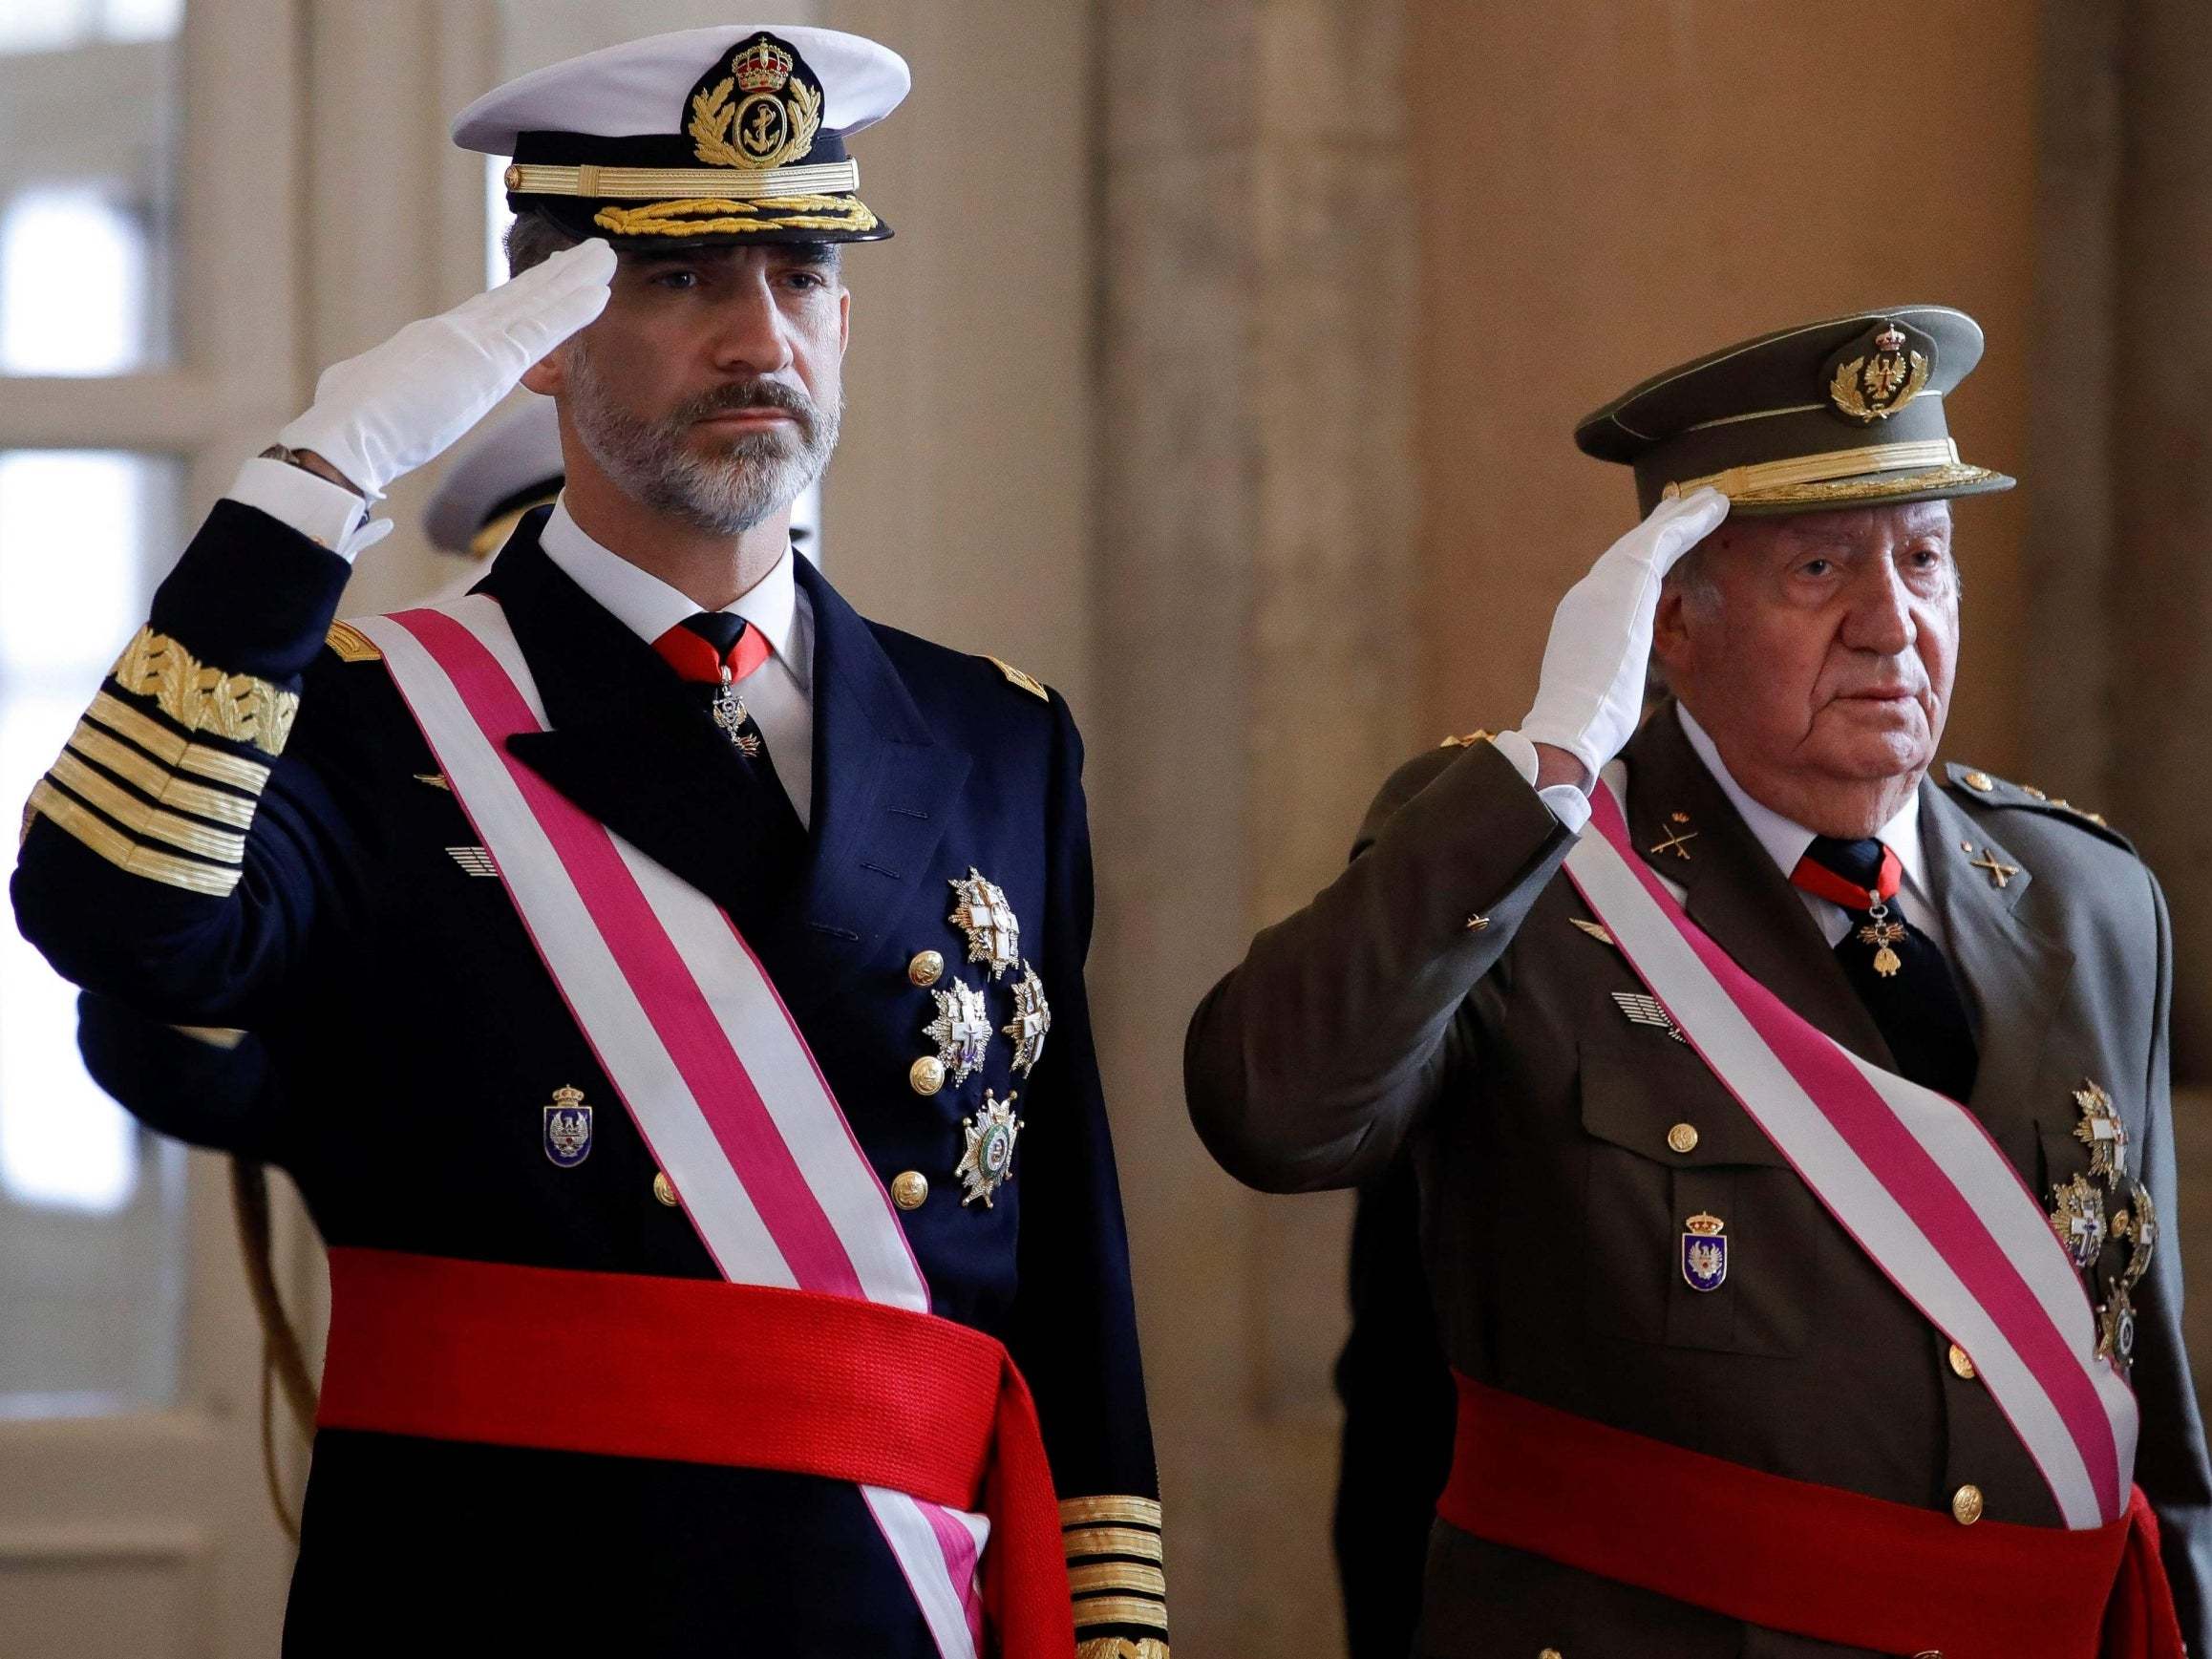 Spain's King Felipe VI and his father King Emeritus Juan Carlos I